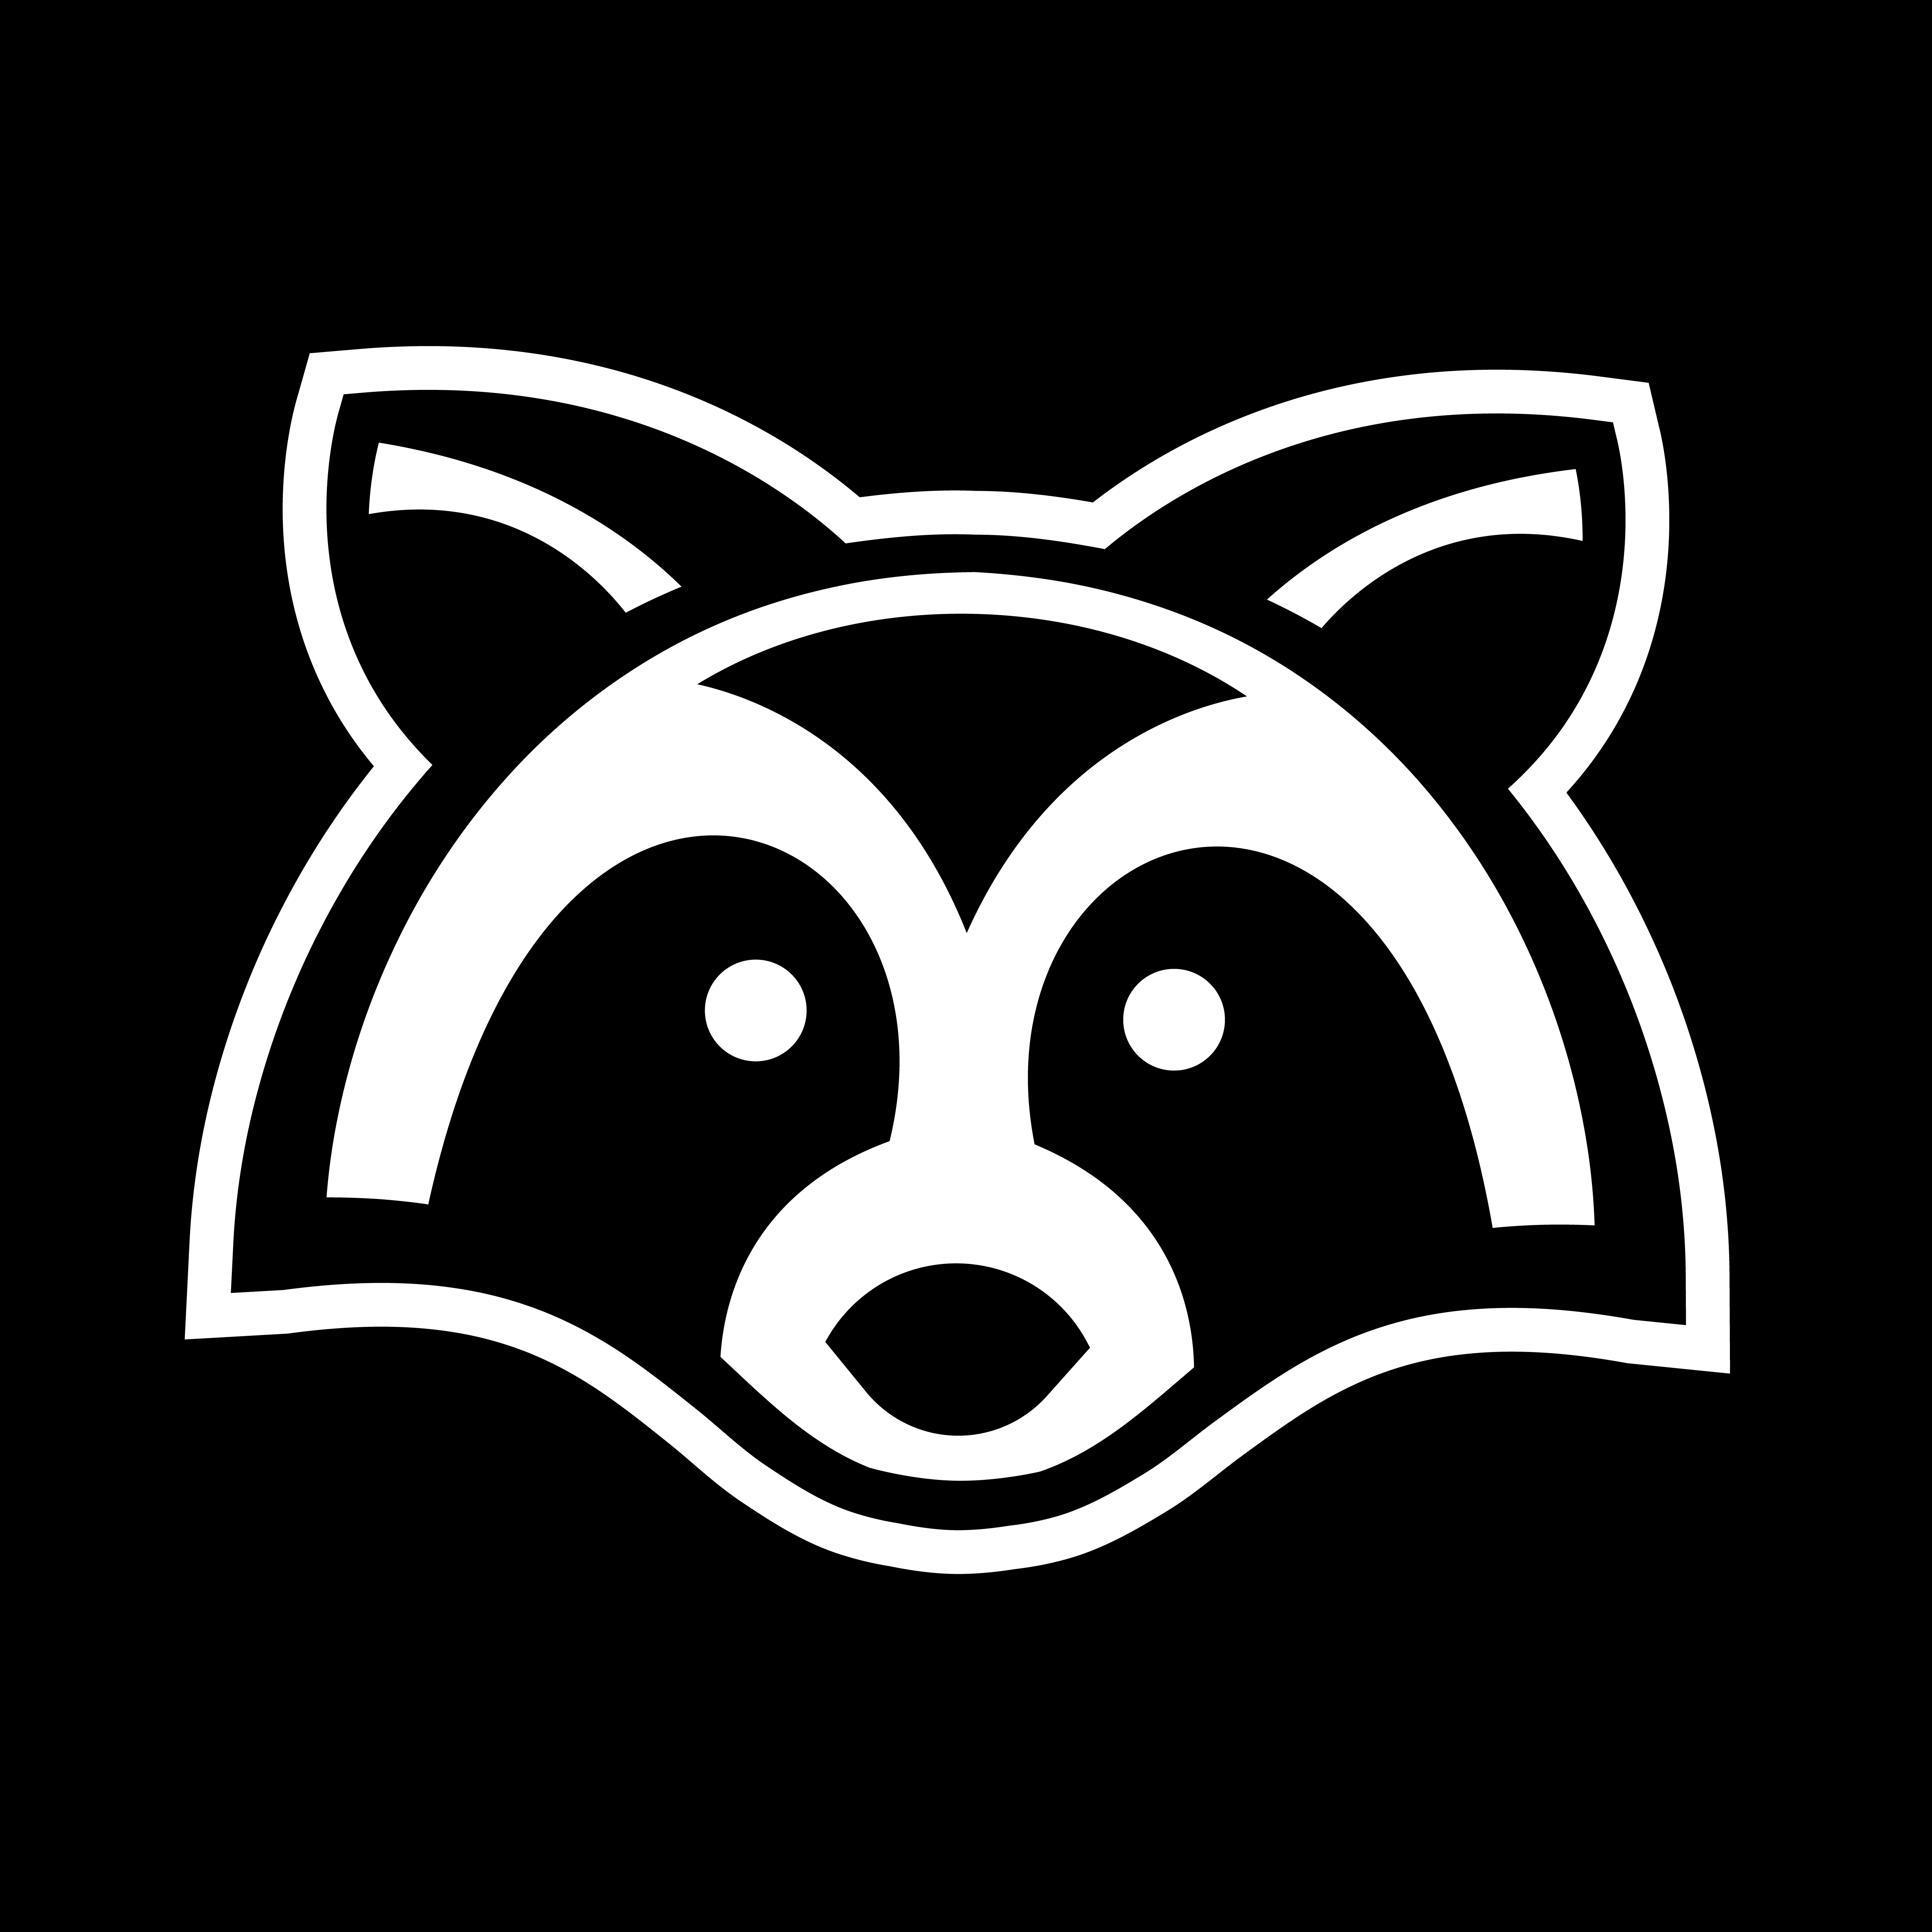 Download Raccoon Animal Face Vector - Download Free Vectors, Clipart Graphics & Vector Art